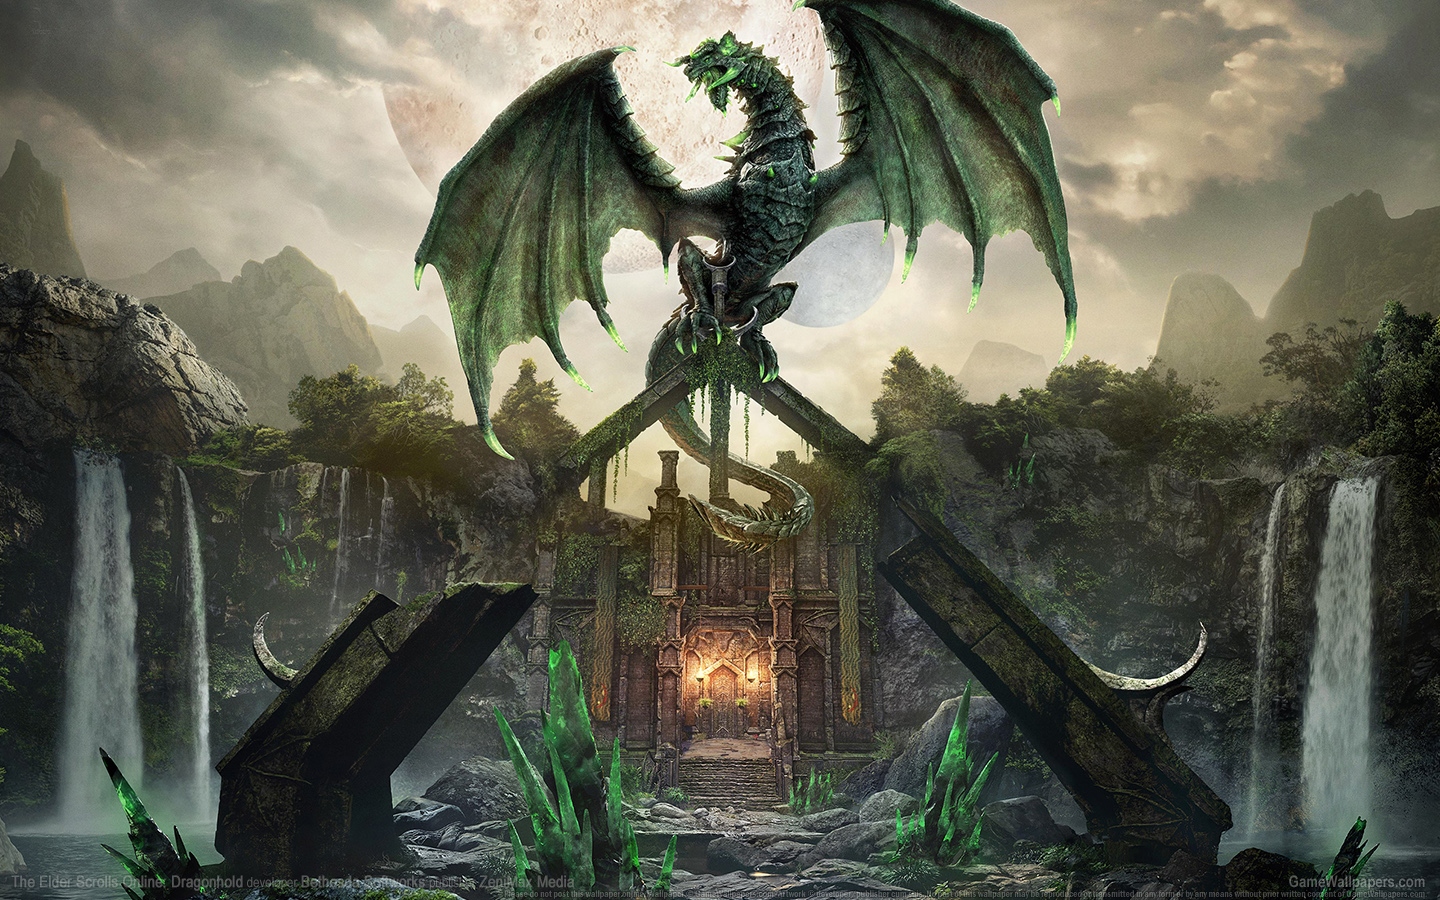 The Elder Scrolls Online: Dragonhold 1440x900 wallpaper or background 01